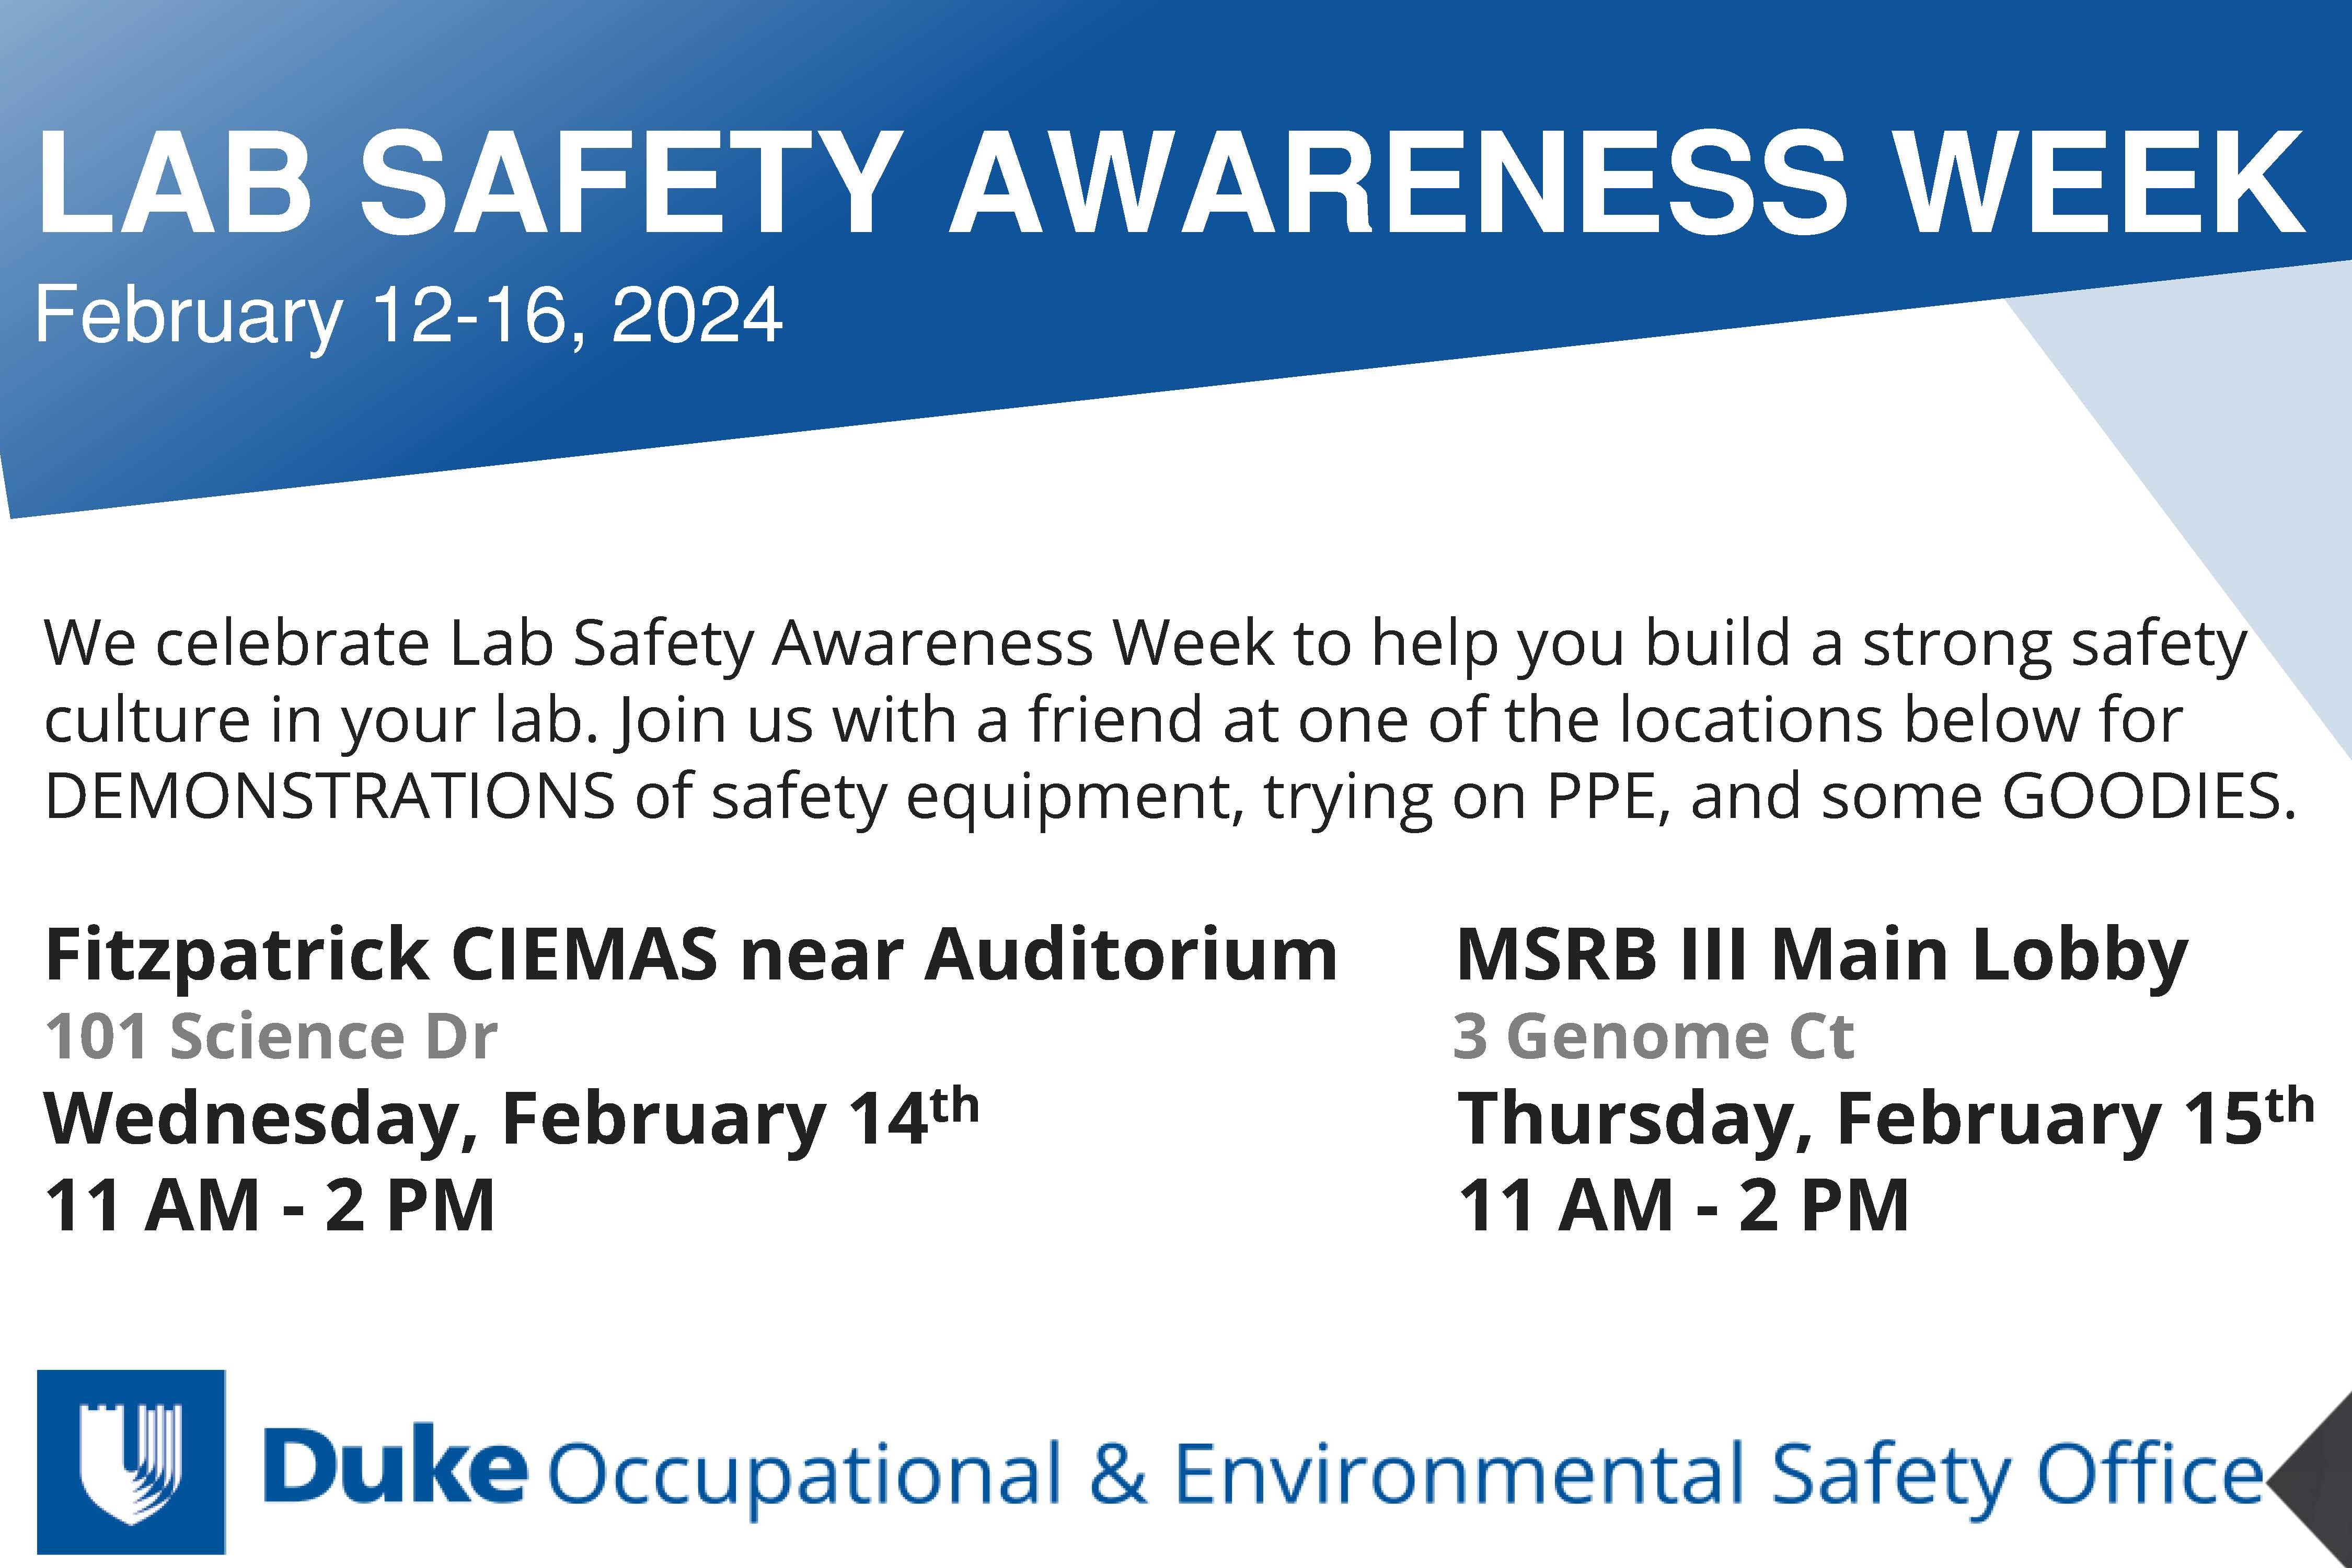 Lab Safety Awareness Week Feb12-16 (safety.duke.edu)